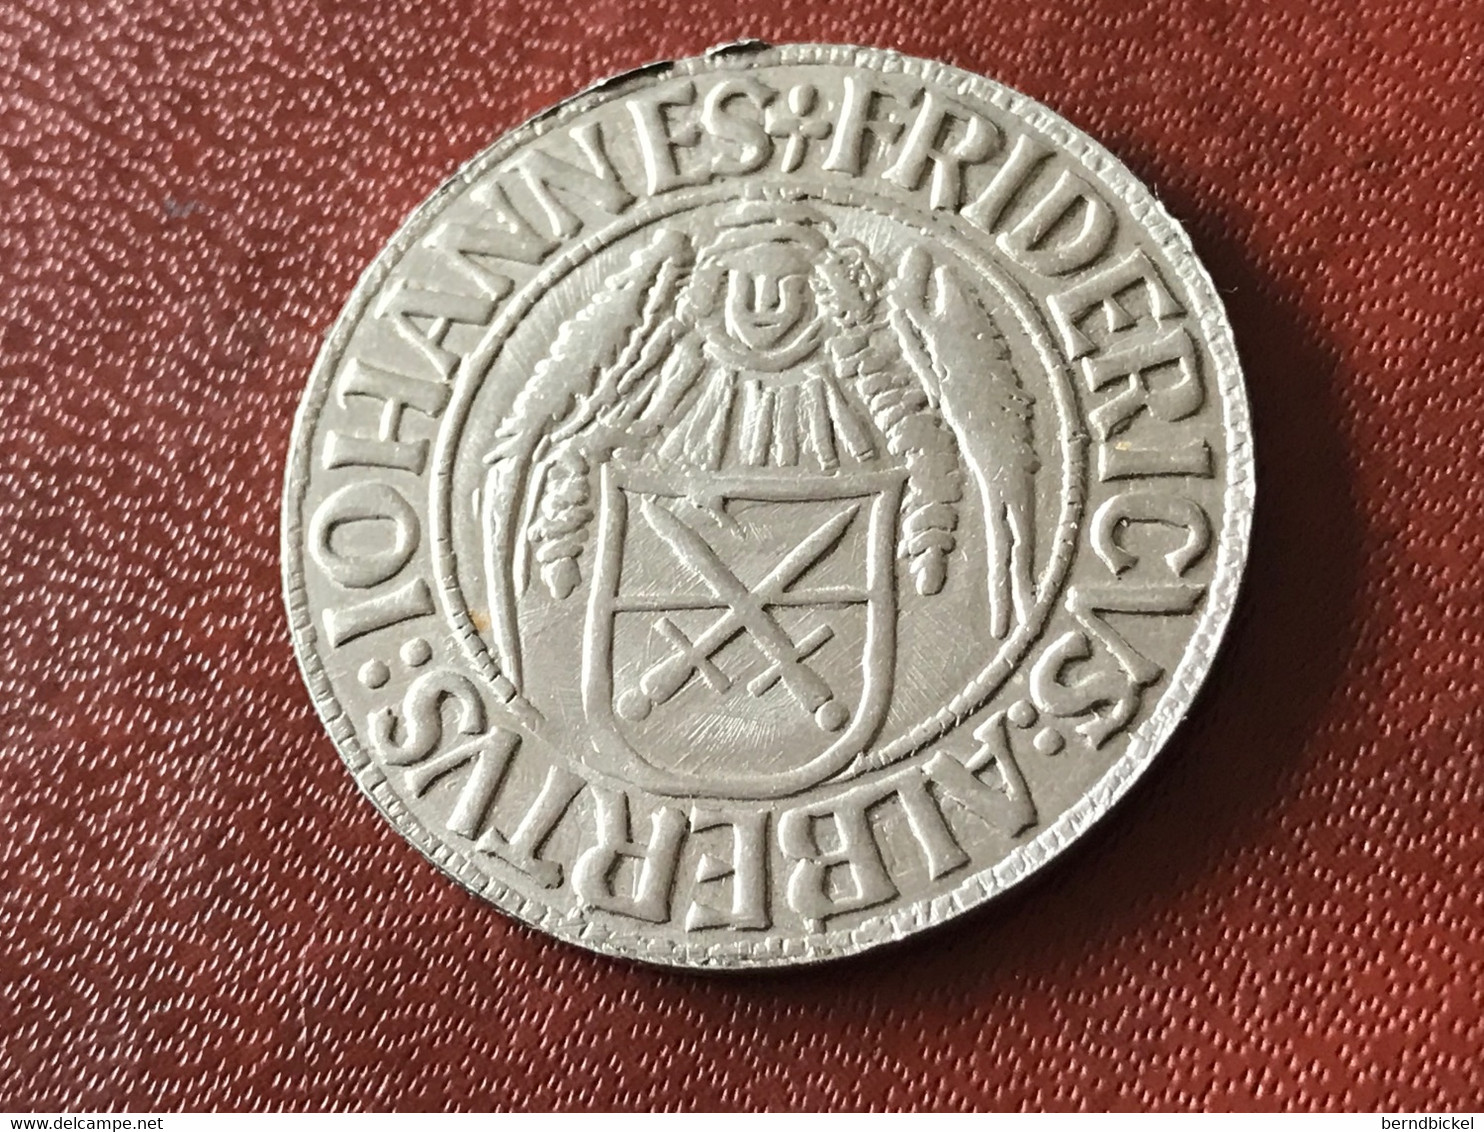 Münze Medaille Frohnauer Hammer 1436 - Monete Allungate (penny Souvenirs)